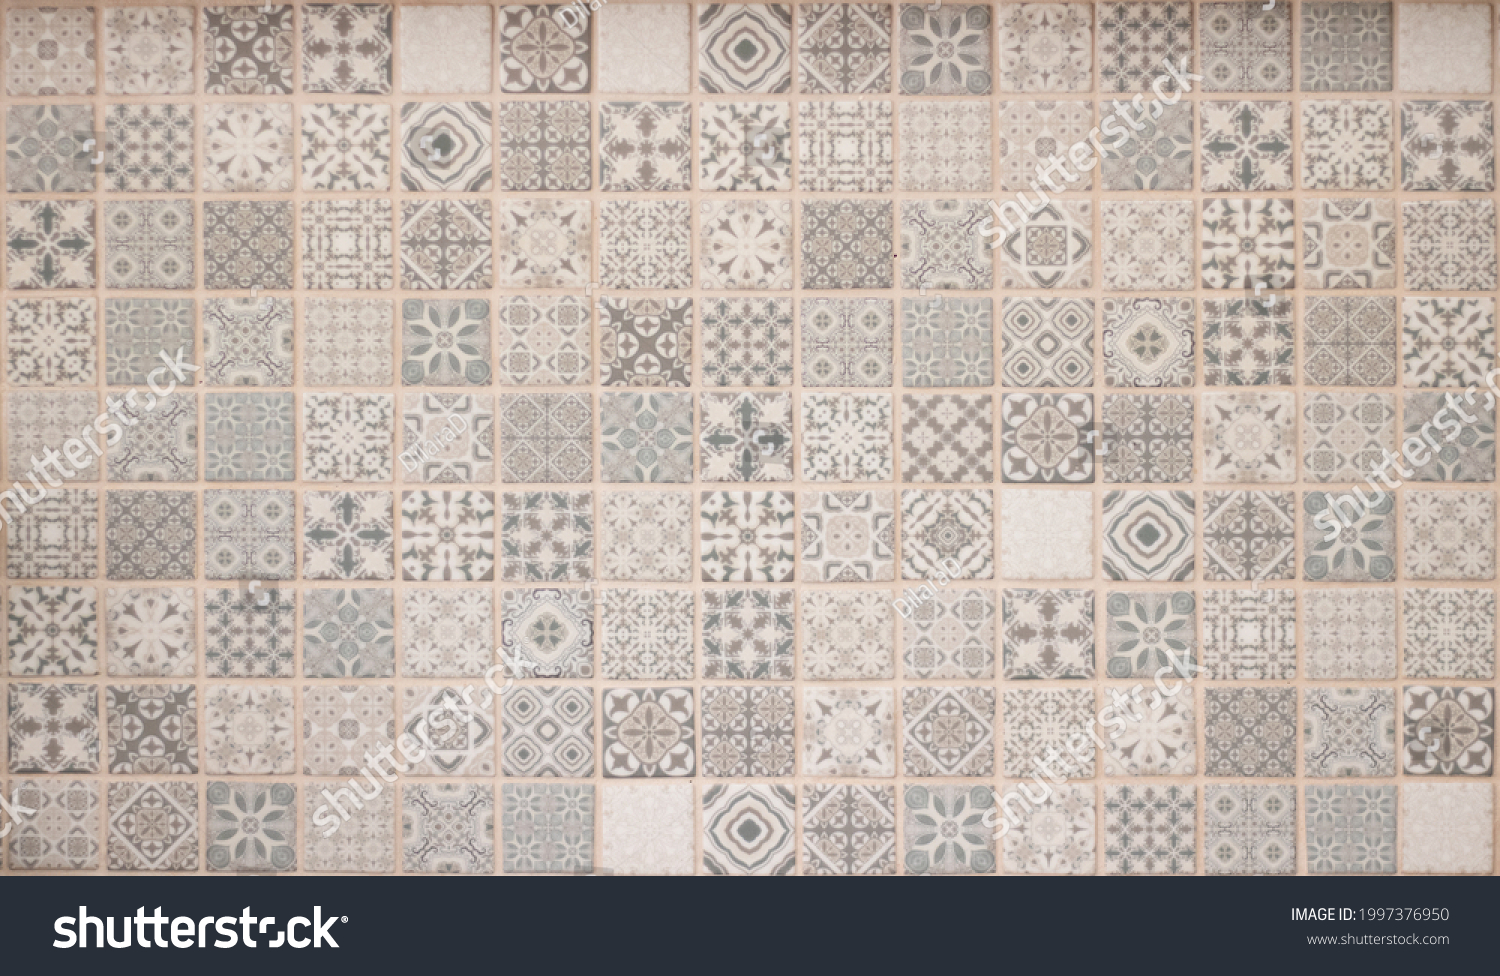 Vintage kitchen mosaic. Green, square wall tiles. Decorative wall texture. Seamless wall pattern. Interior design element. Geometric ceramic mosaics on bathroom wall. Stylish interior tiles. #1997376950